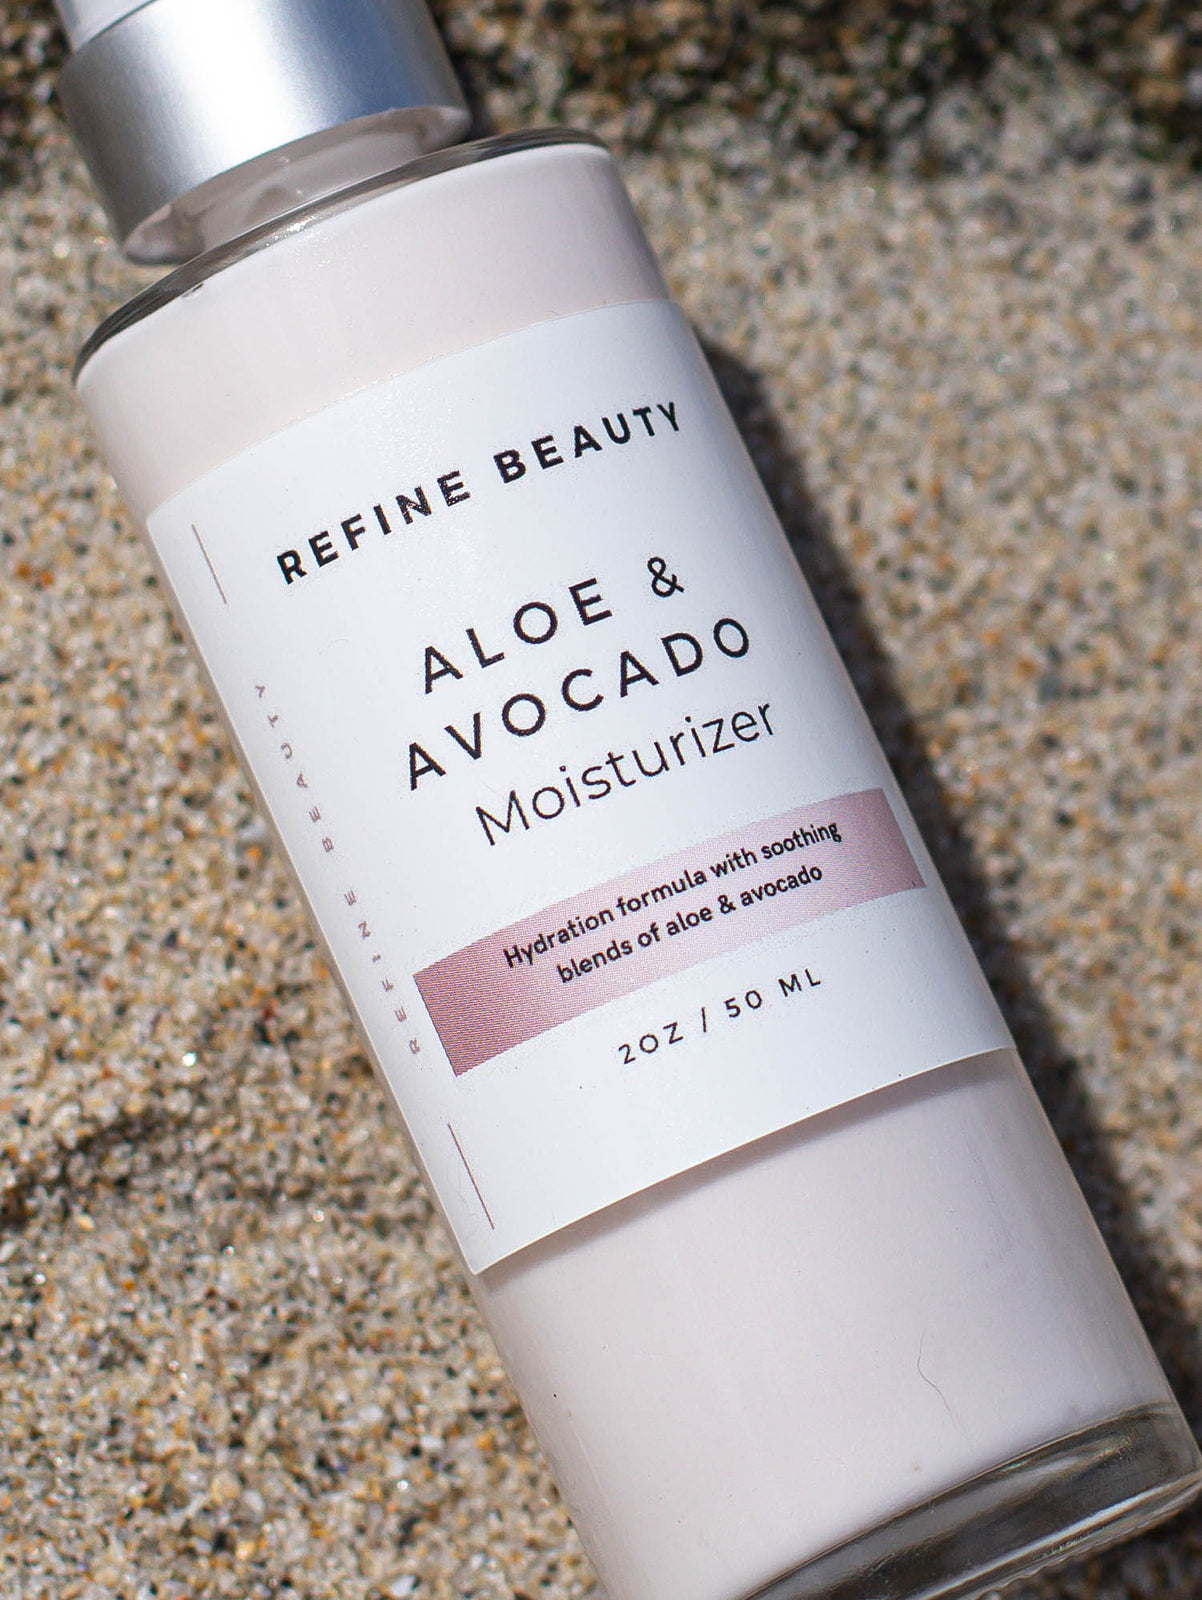 aloe & avocado moisturizer for face and neck